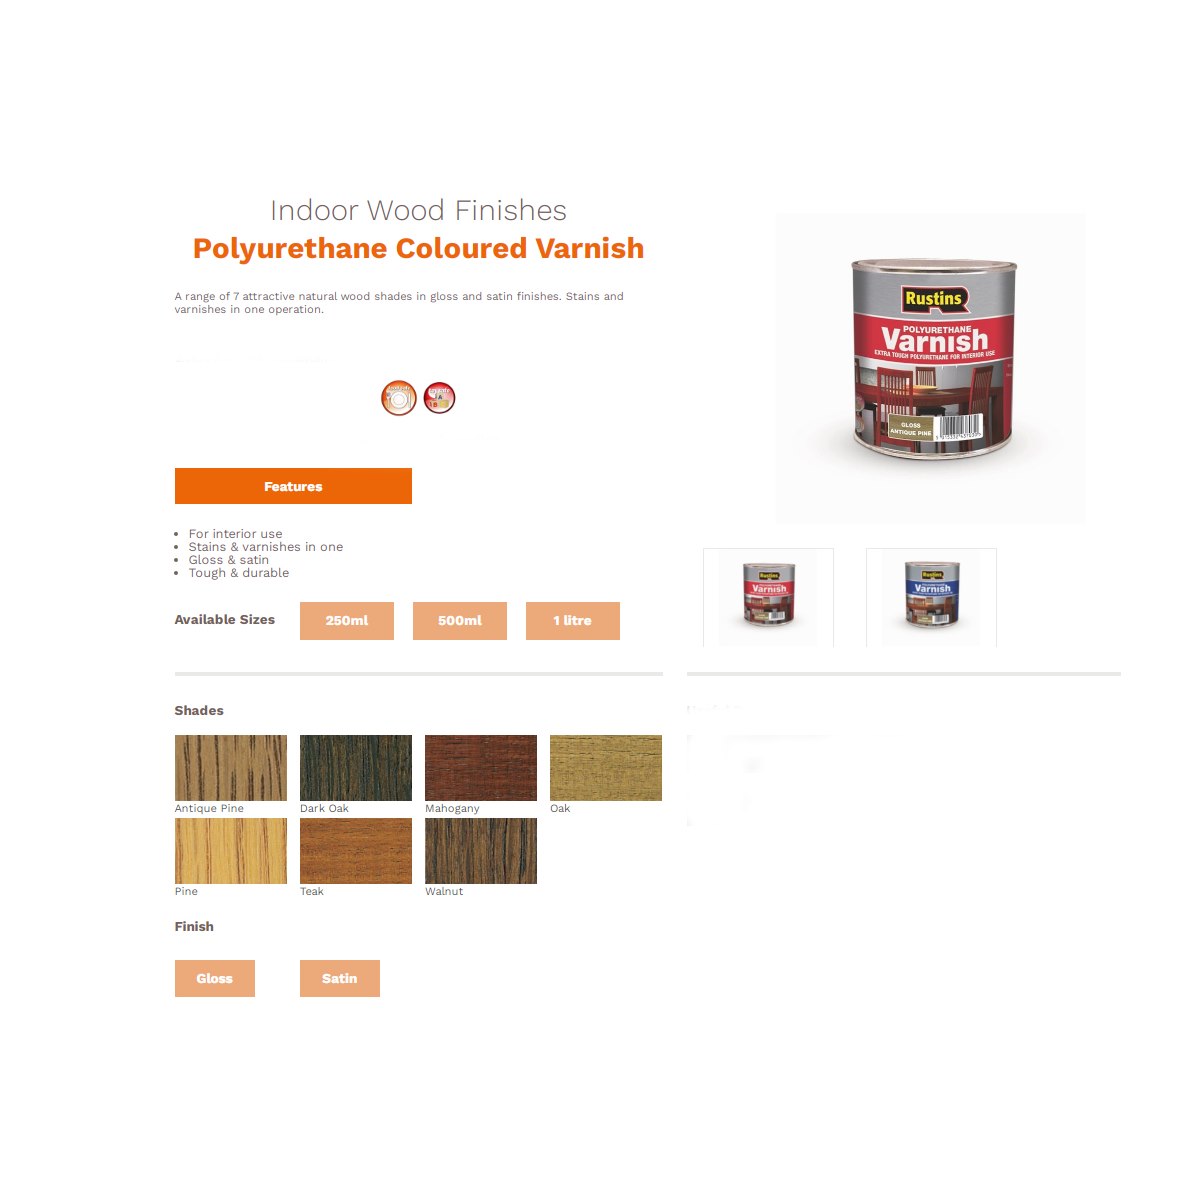 Where to Buy Rustins Polyurethane Coloured Varnish